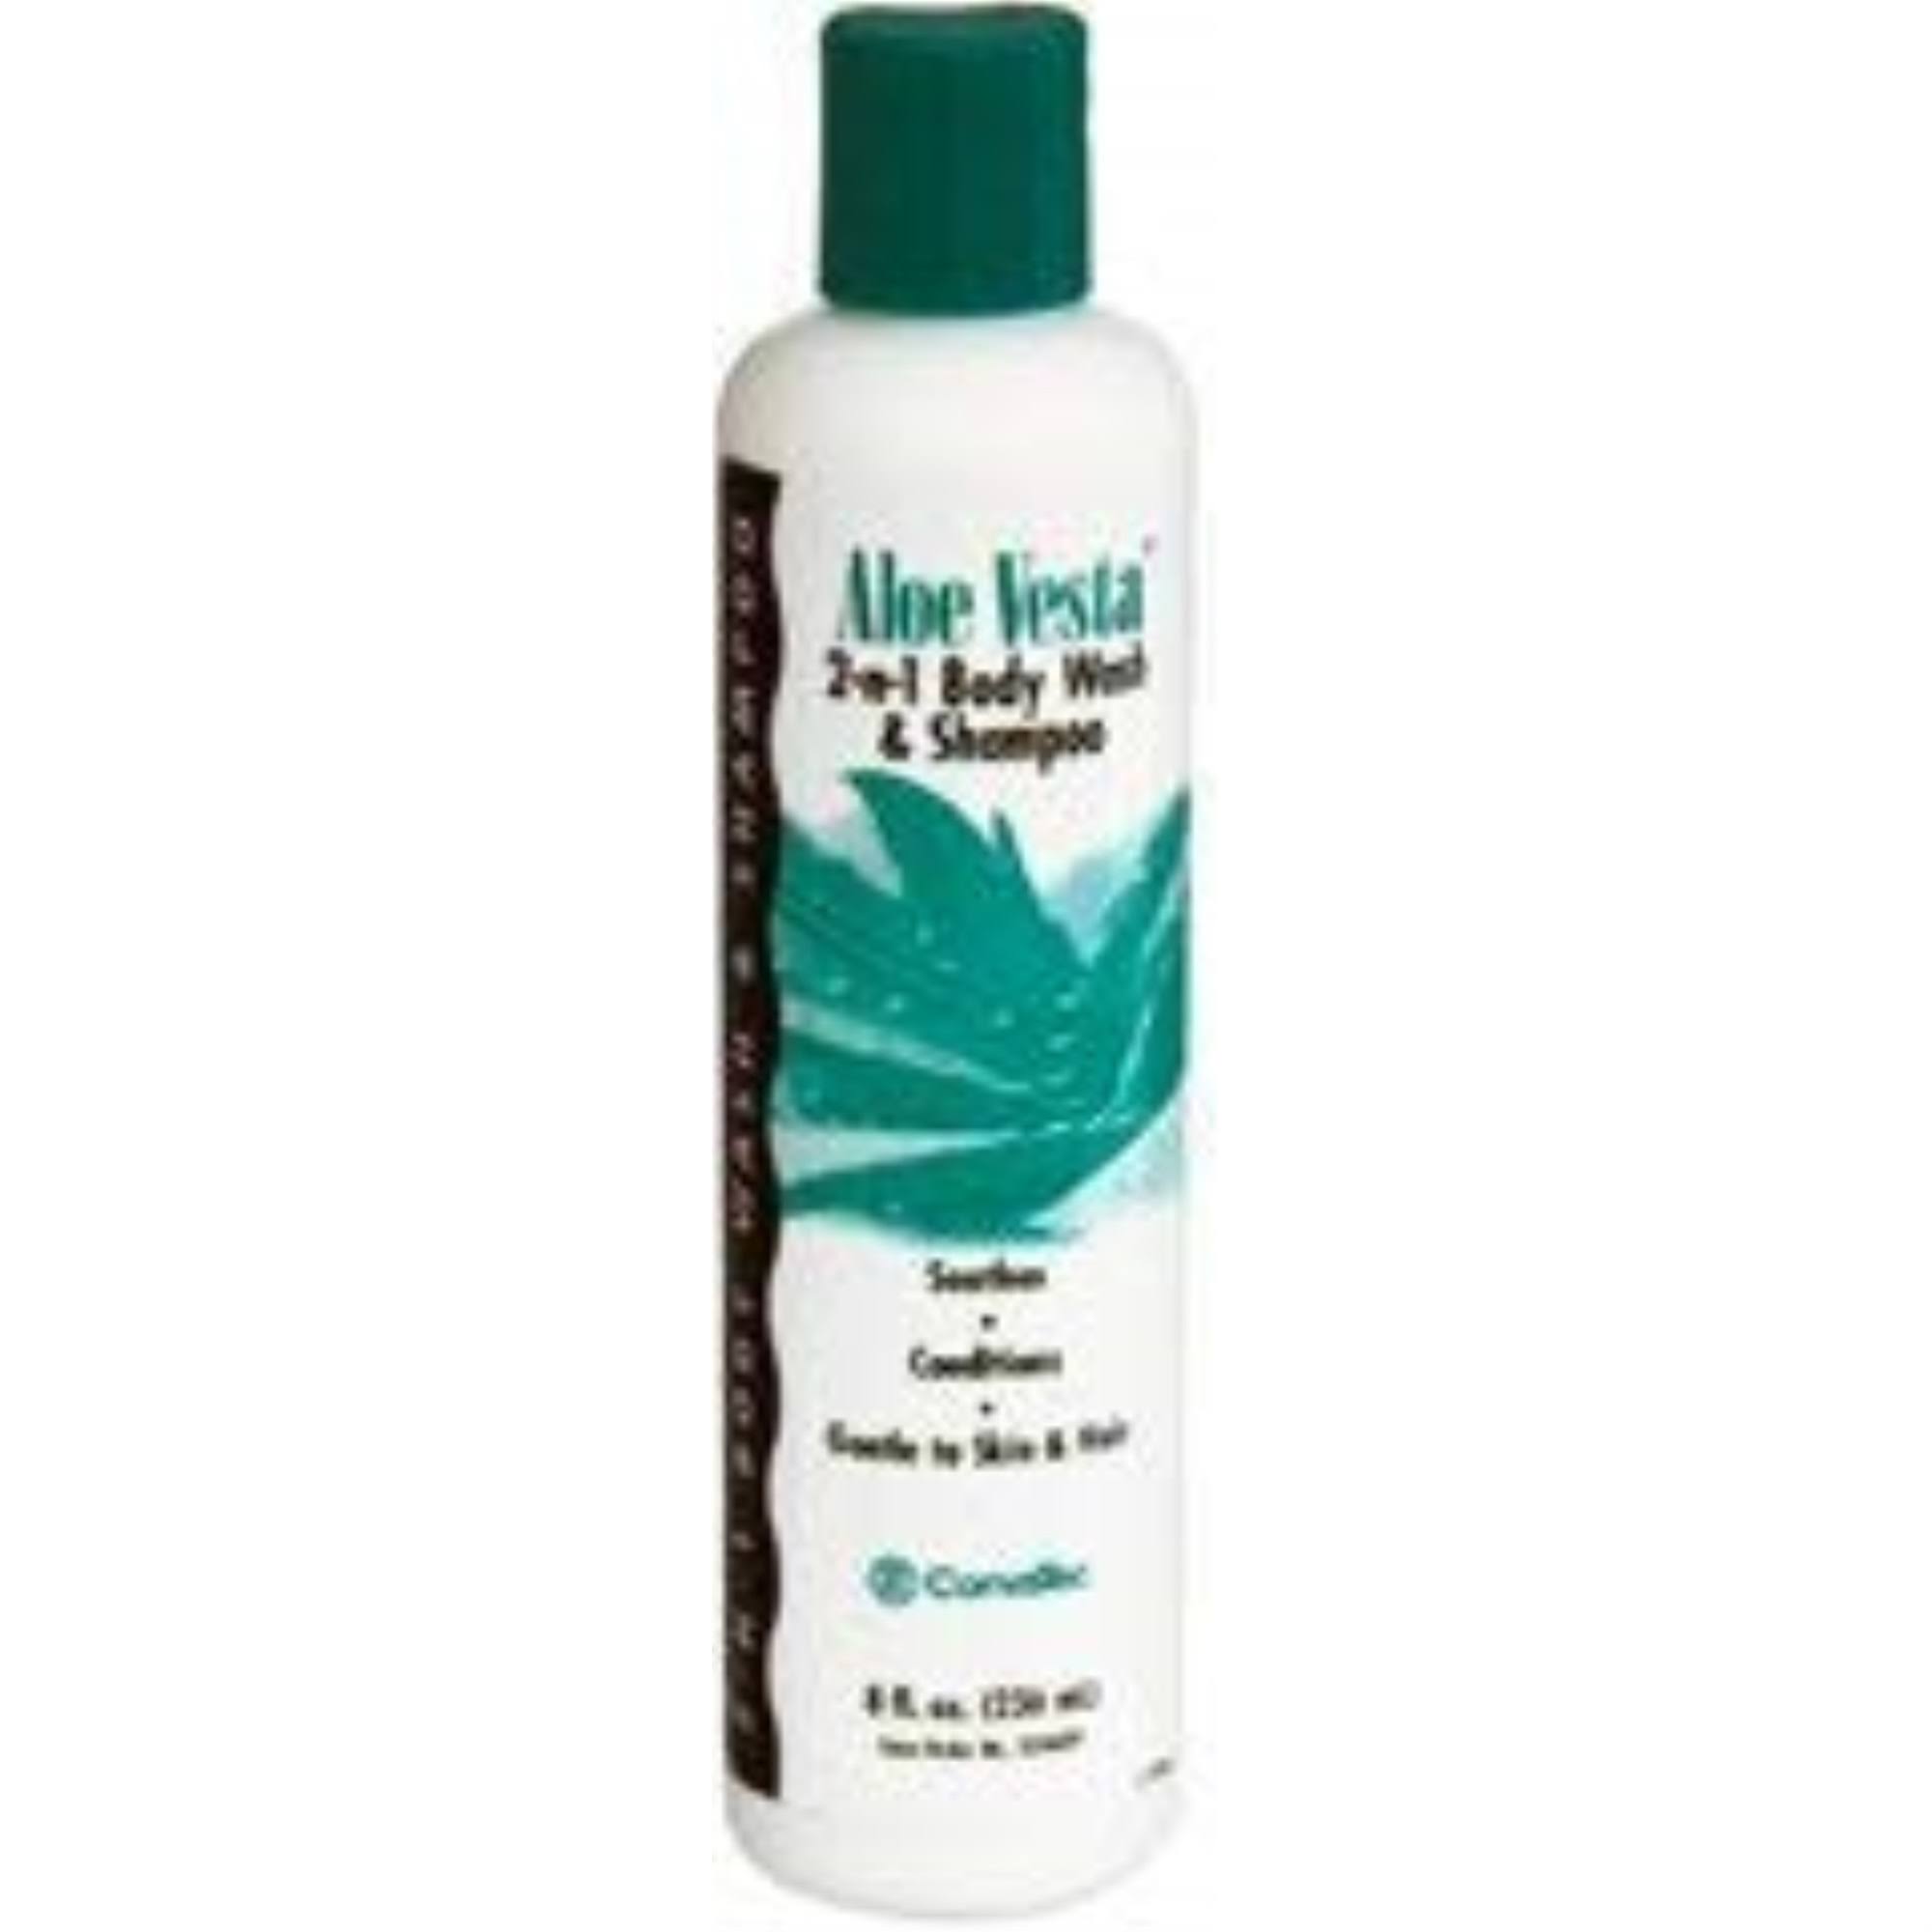 Aloe Vesta Body Wash & Shampoo - With Natural Botanical Aloe Vera, 8oz